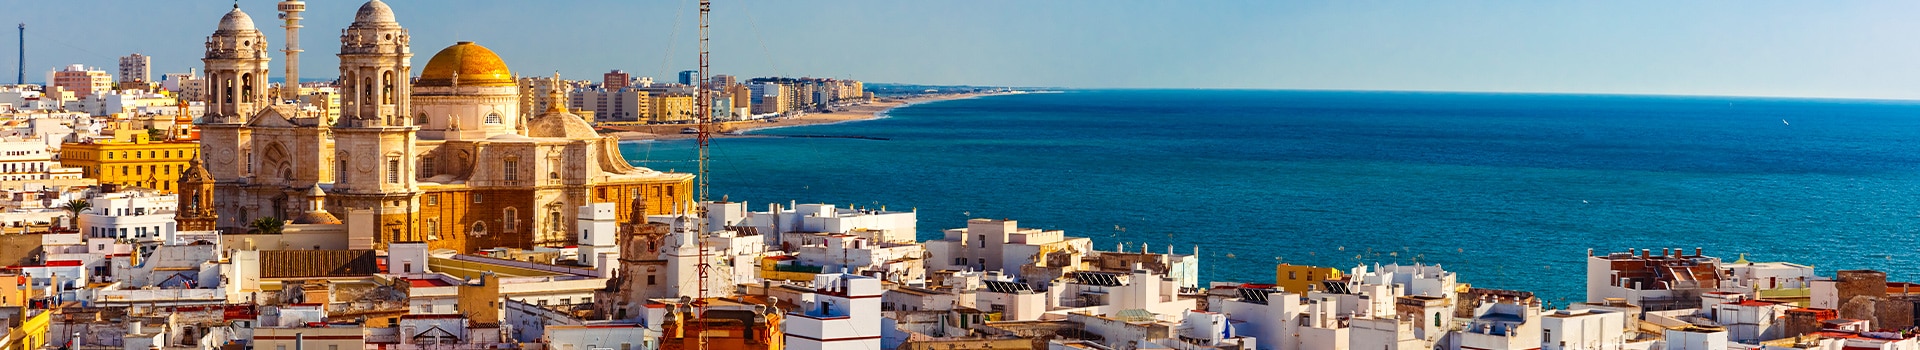 Billetes de Barco de Puerto del Rosario (Fuerteventura) a Cádiz